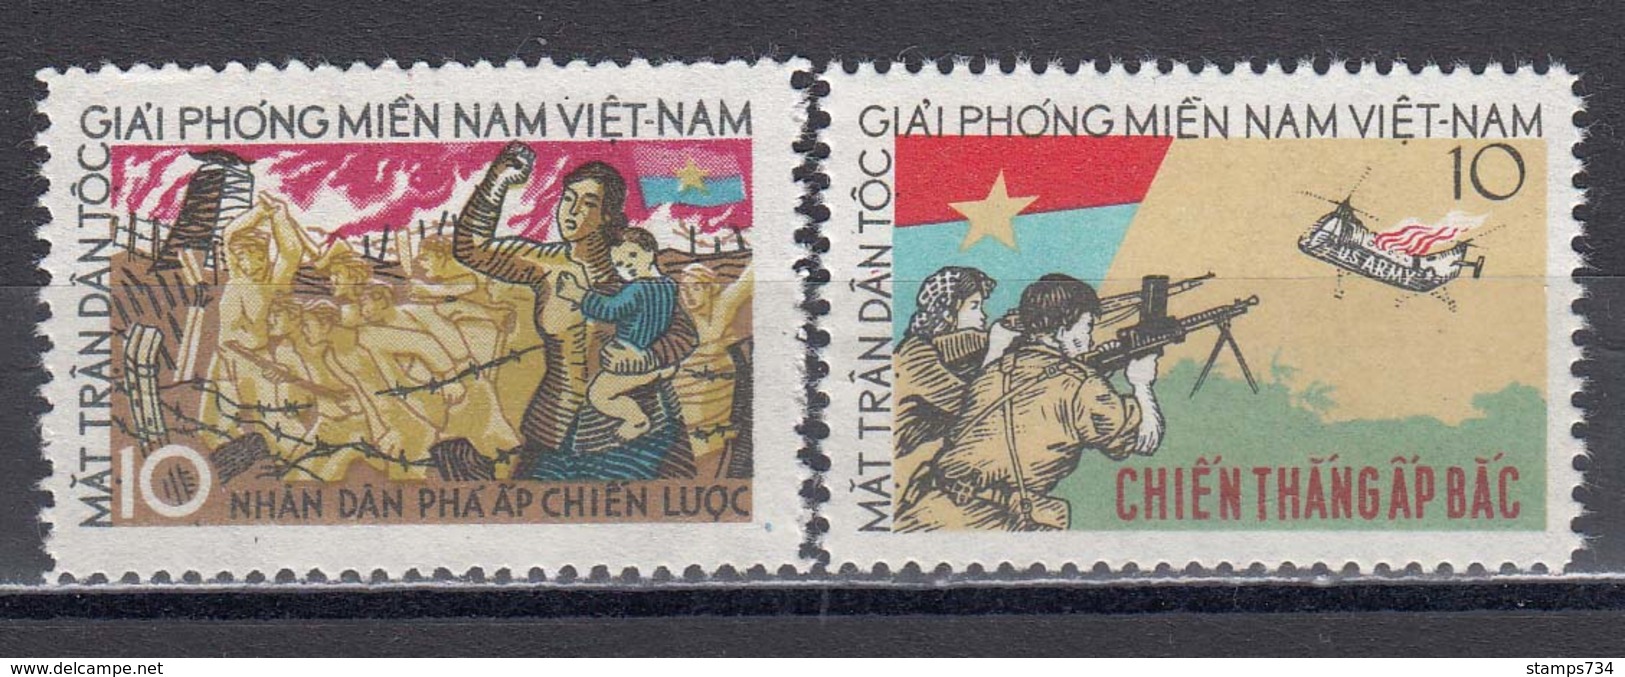 Vietnam 1963 - Ausgabe Der Vietcong - Michel 4/5, MNH** - Vietnam